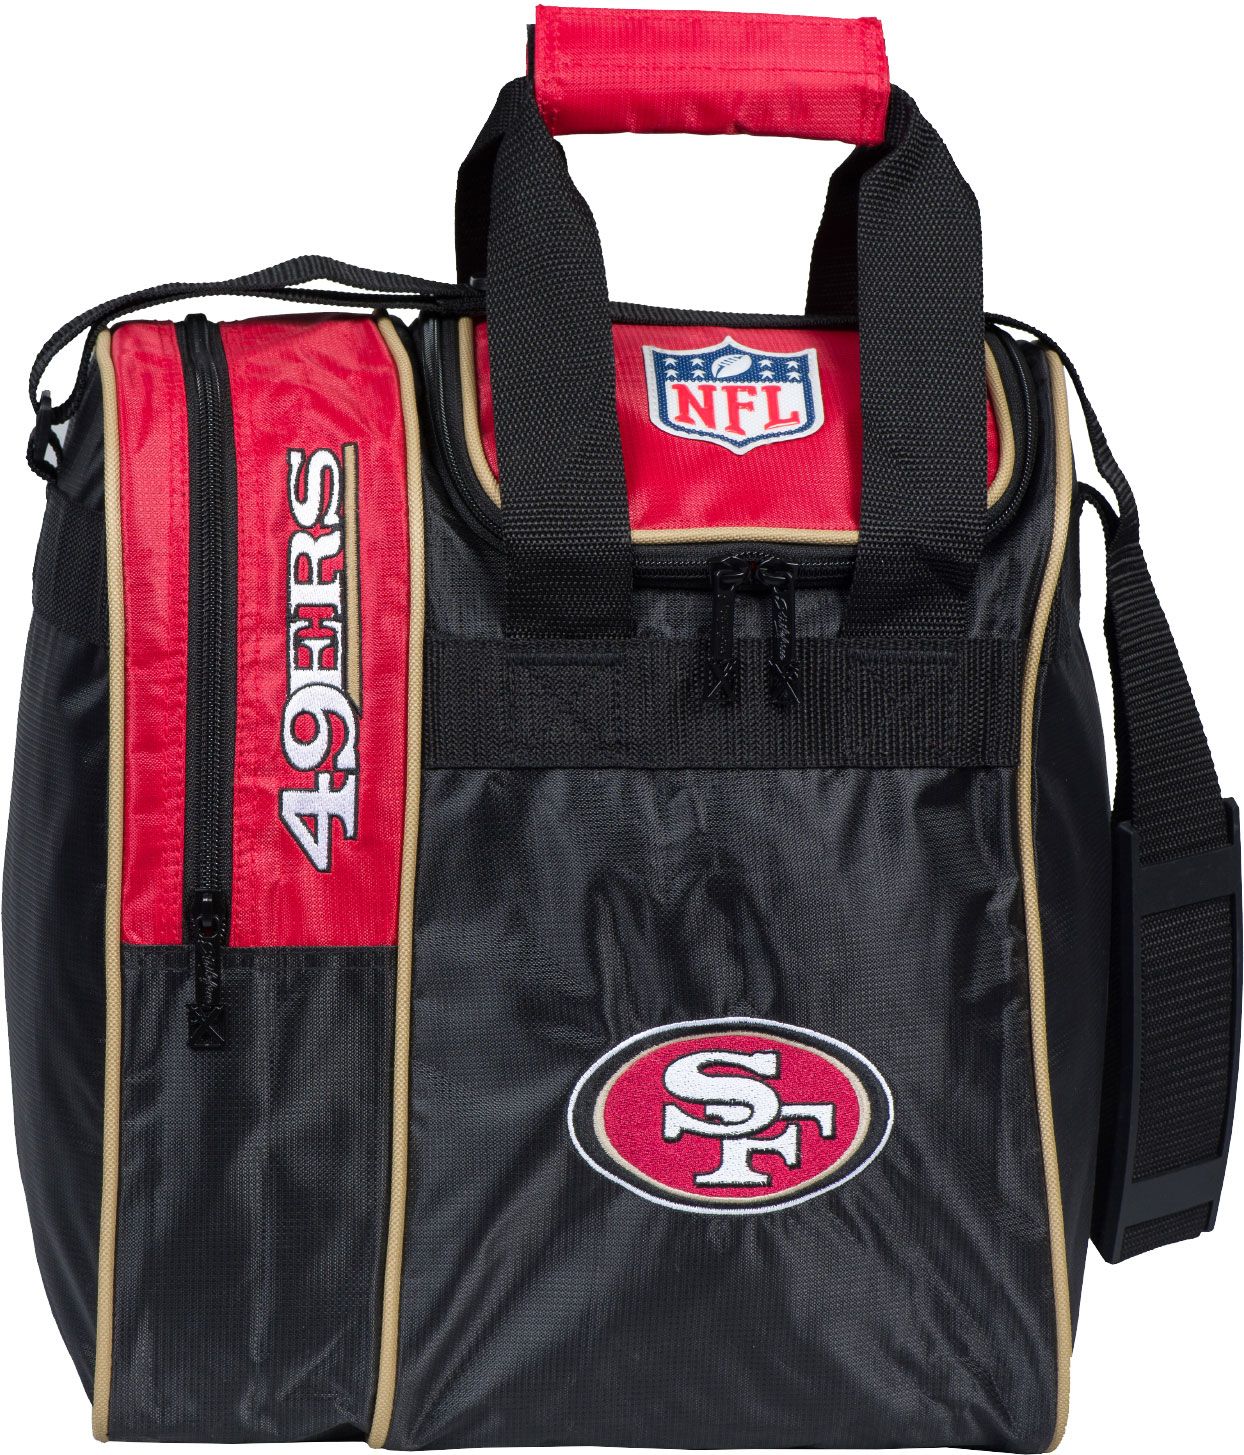 Strikeforce San Francisco 49ers Single Bowling Ball Tote Bag